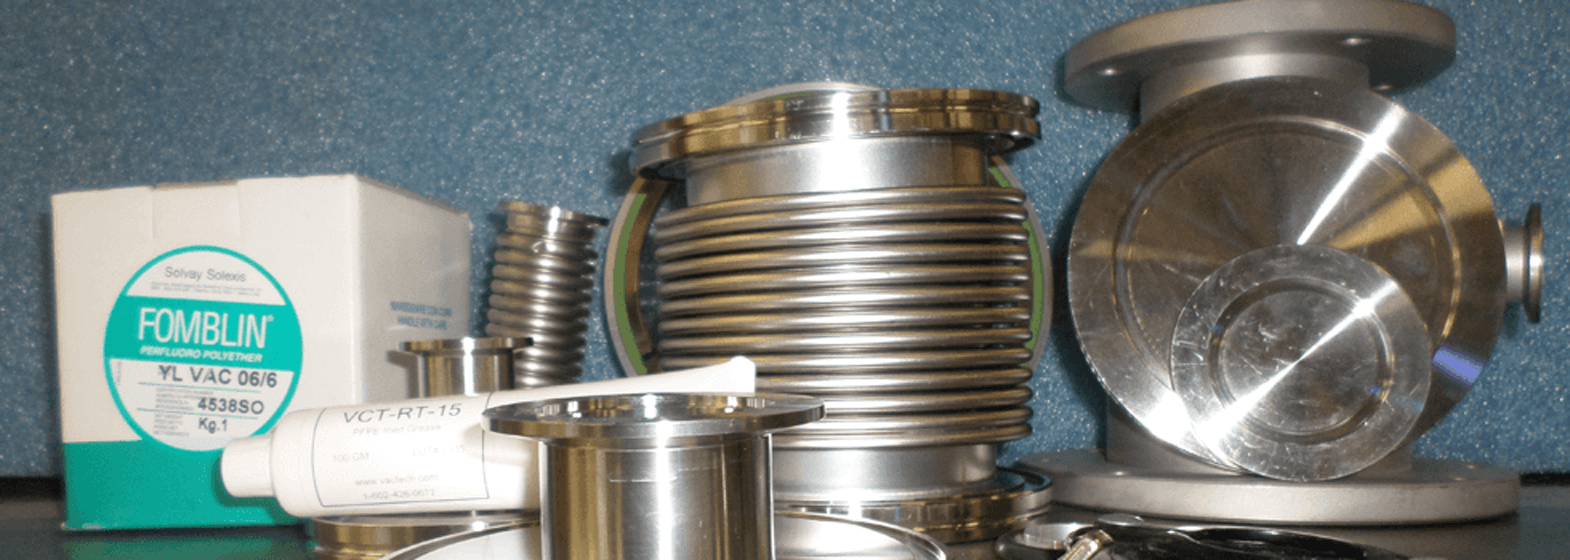 Vac-Tech Inc. - Precision High Vacuum Pump Repair and Sales